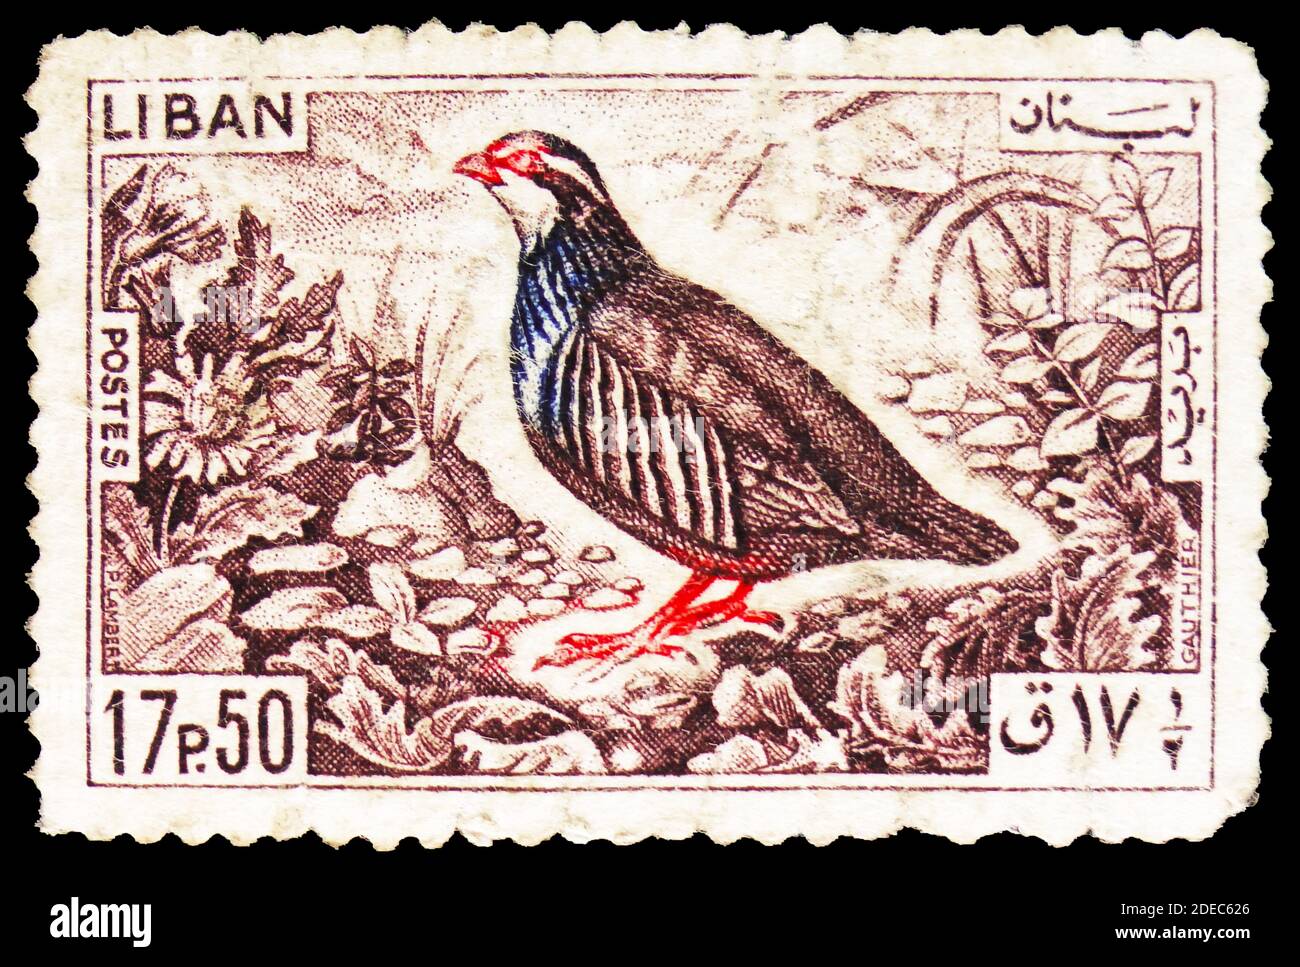 MOSCOW, RUSSIA - OCTOBER 25, 2020: Postage stamp printed in Lebanon shows Rock Partridge (Alectoris graeca), Birds serie, circa 1965 Stock Photo